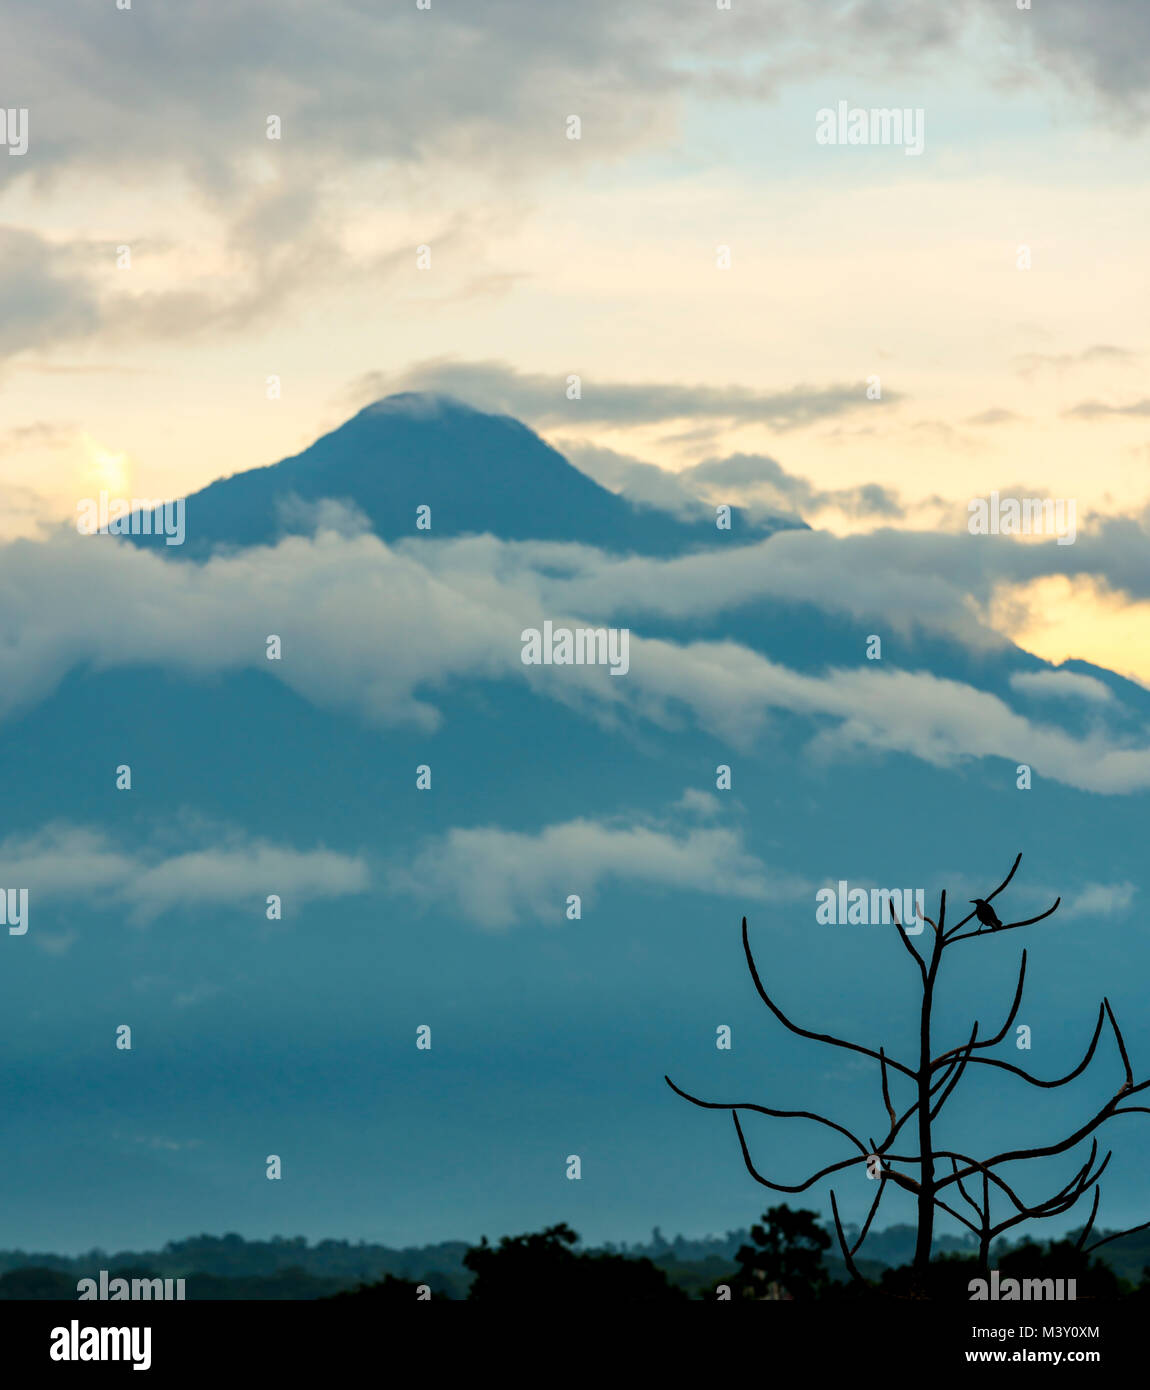 Vulkan Tajumulco in Guatemala mit Vogel in einem Baum Silhouette Stockfoto